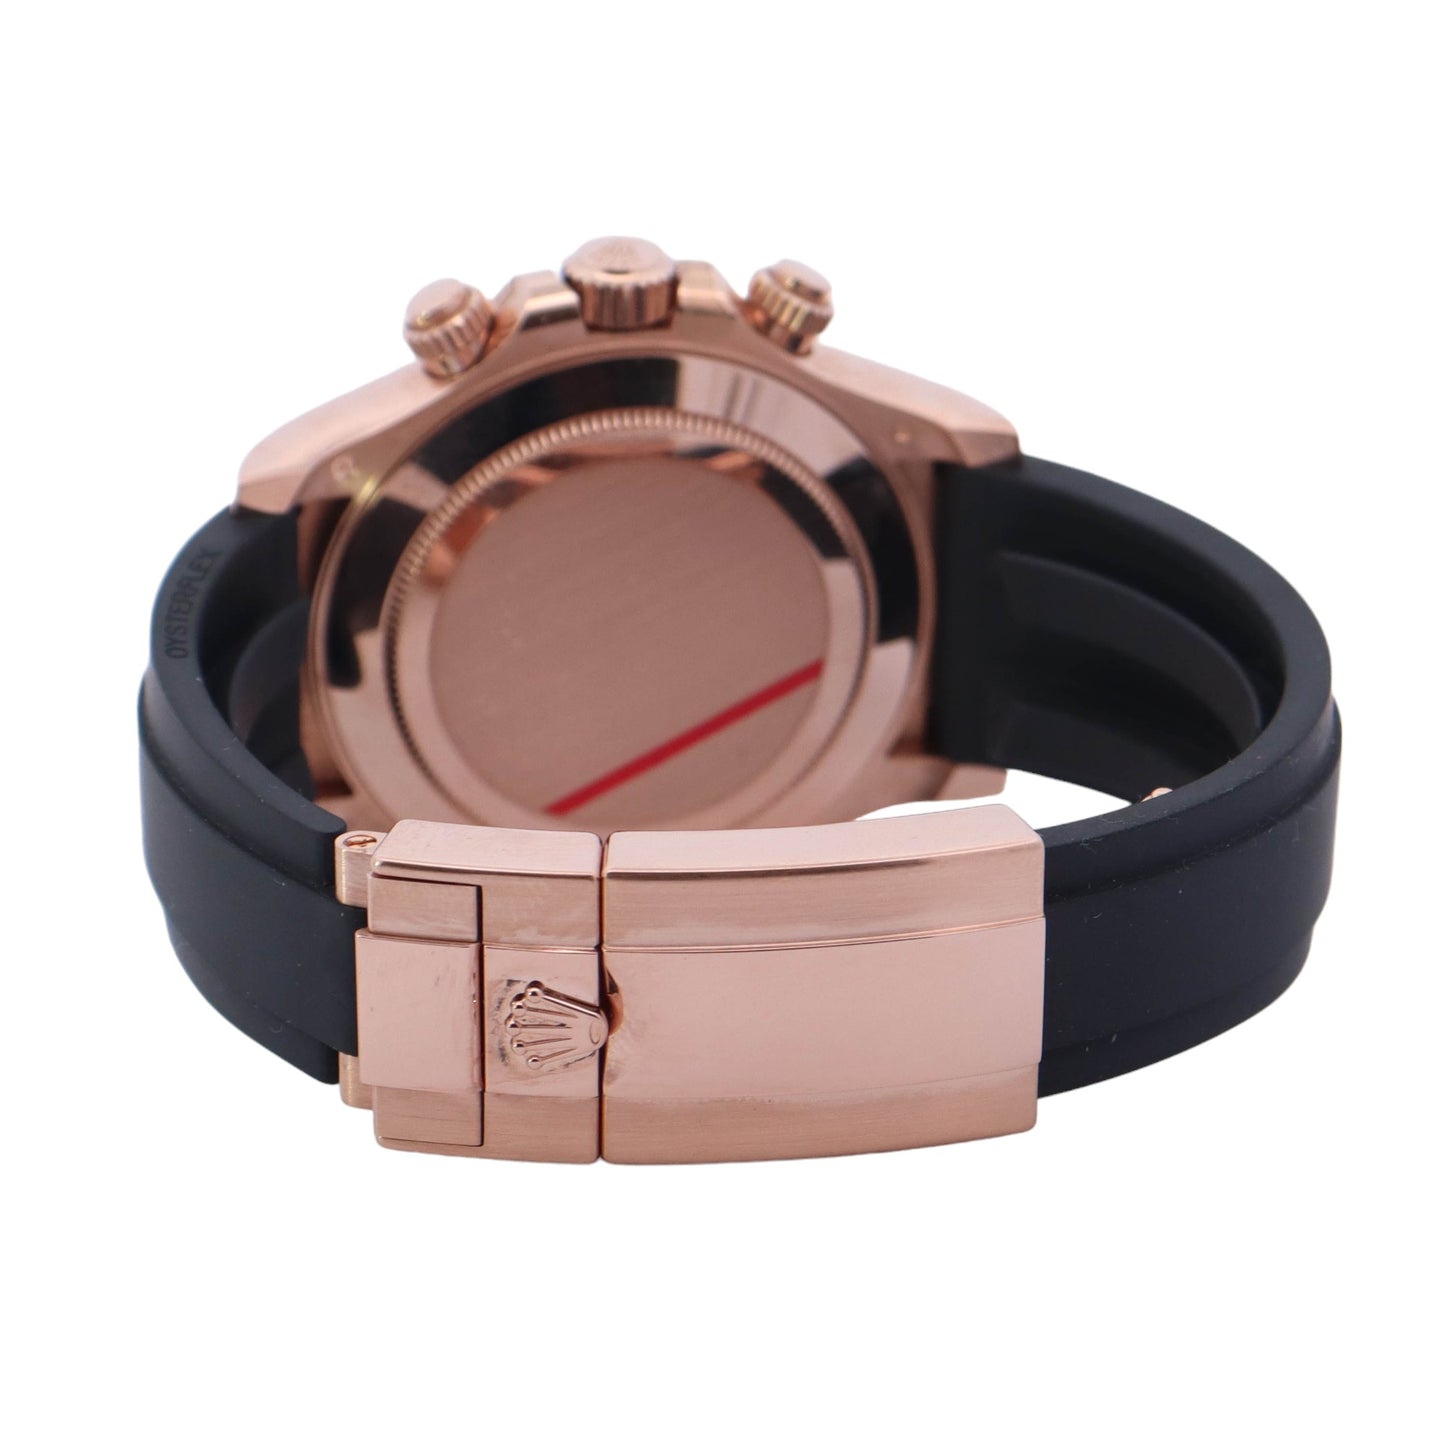 Rolex Daytona Rose Gold 40mm Sundust Pink Chronograph Dial Watch Reference# 116515LN